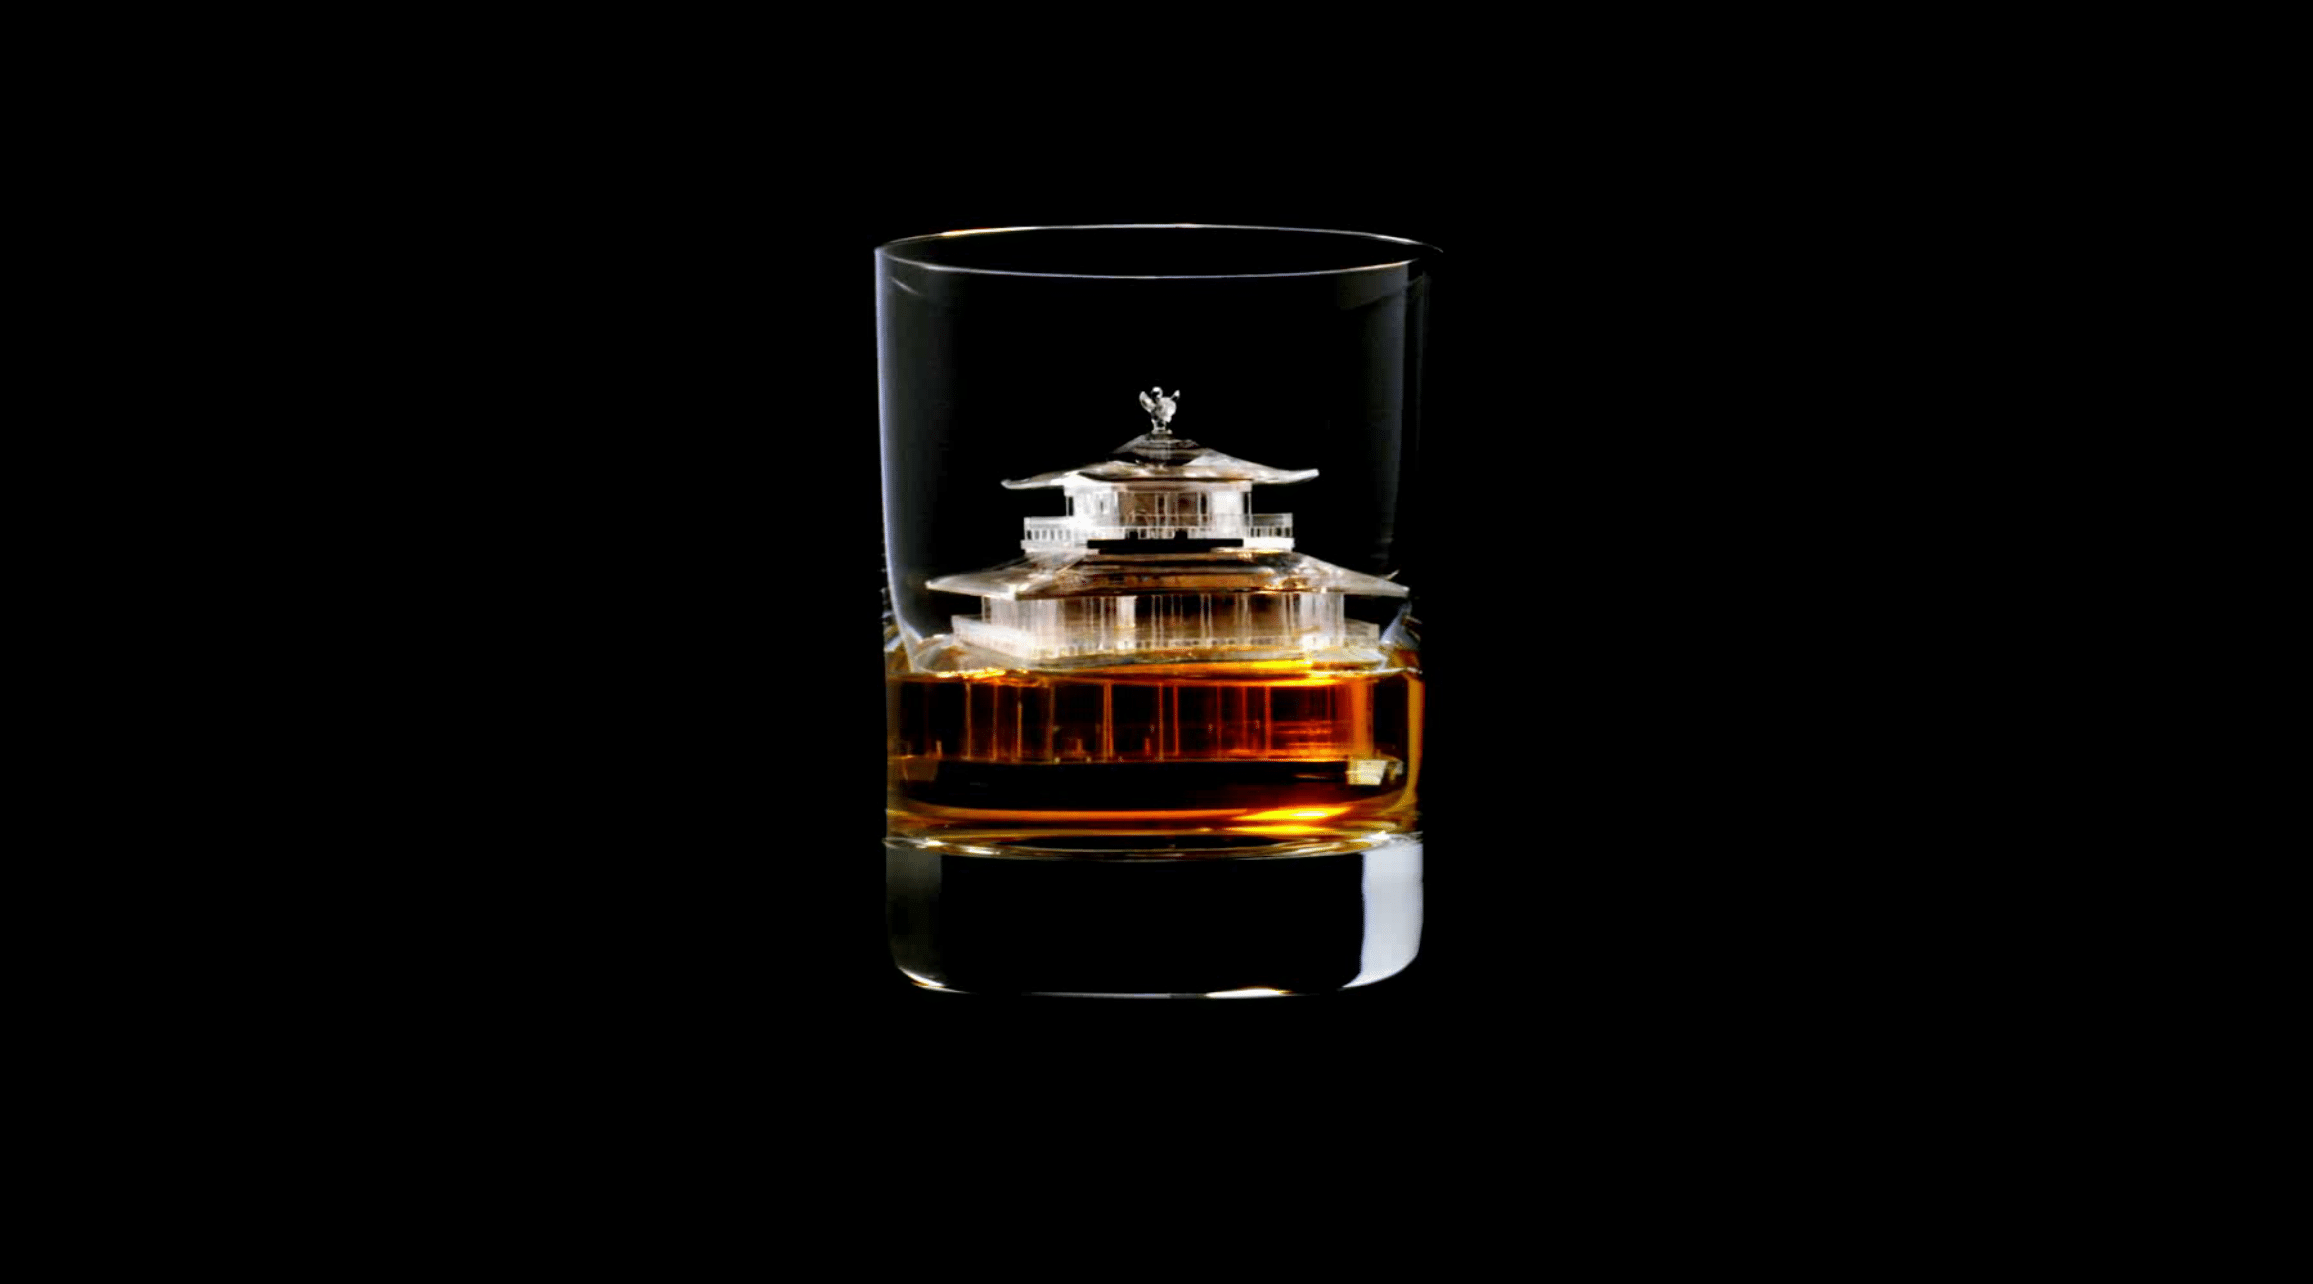 A whisky glass with a miniature ice sculpture of Kinkaku-ji